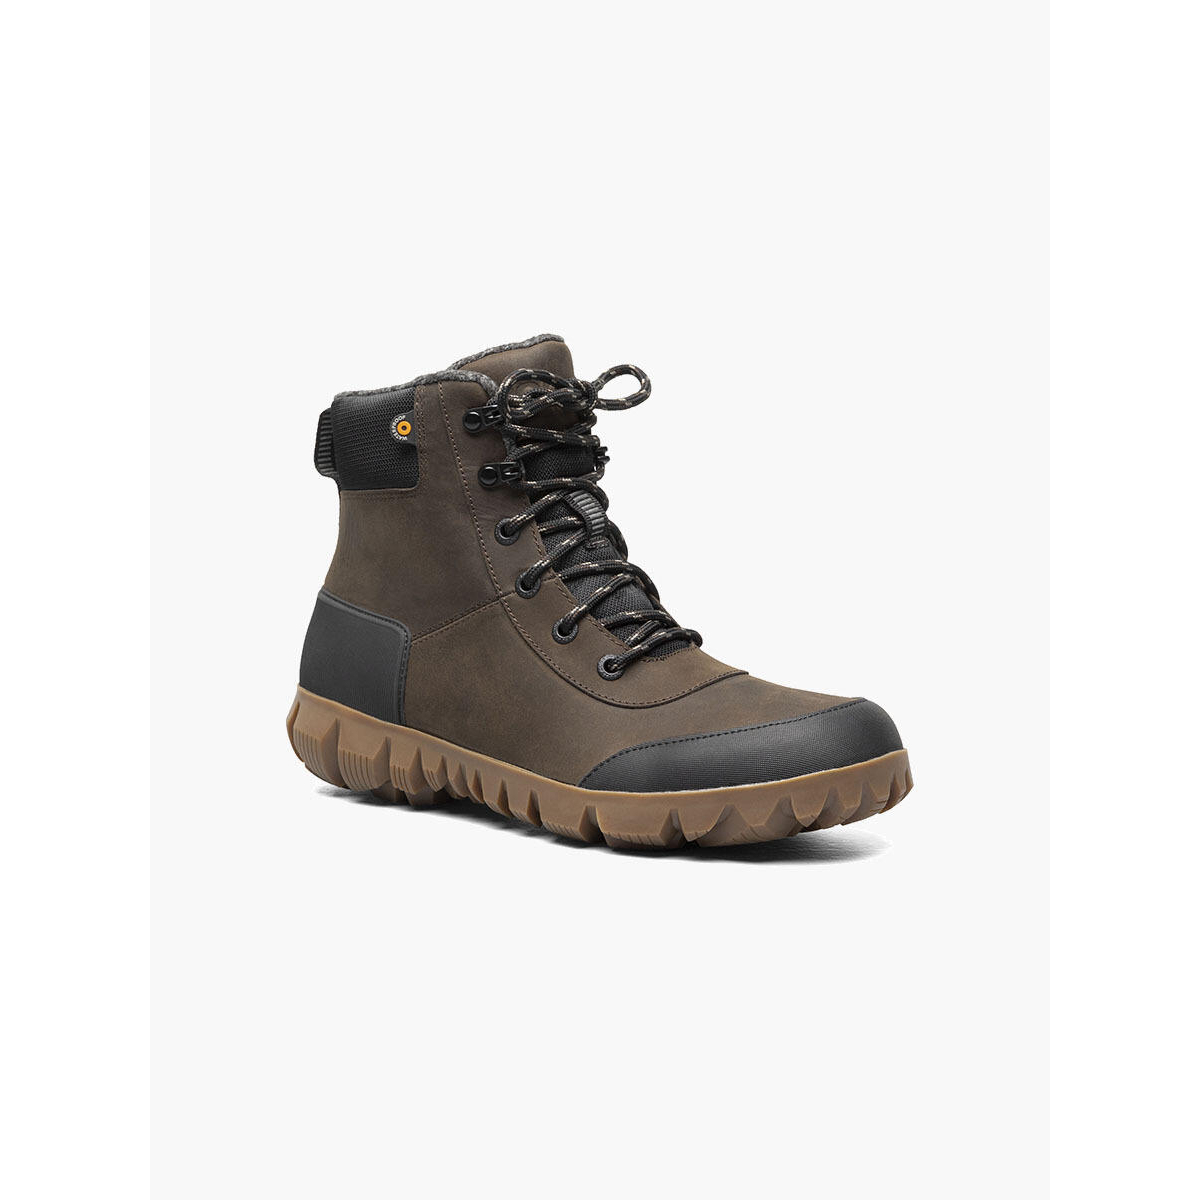 BOGS Men's Arcata Urban Leather Mid Winter Boots Chocolate - 72909-202 CHOCOLATE - Royalblue, 11.5-M